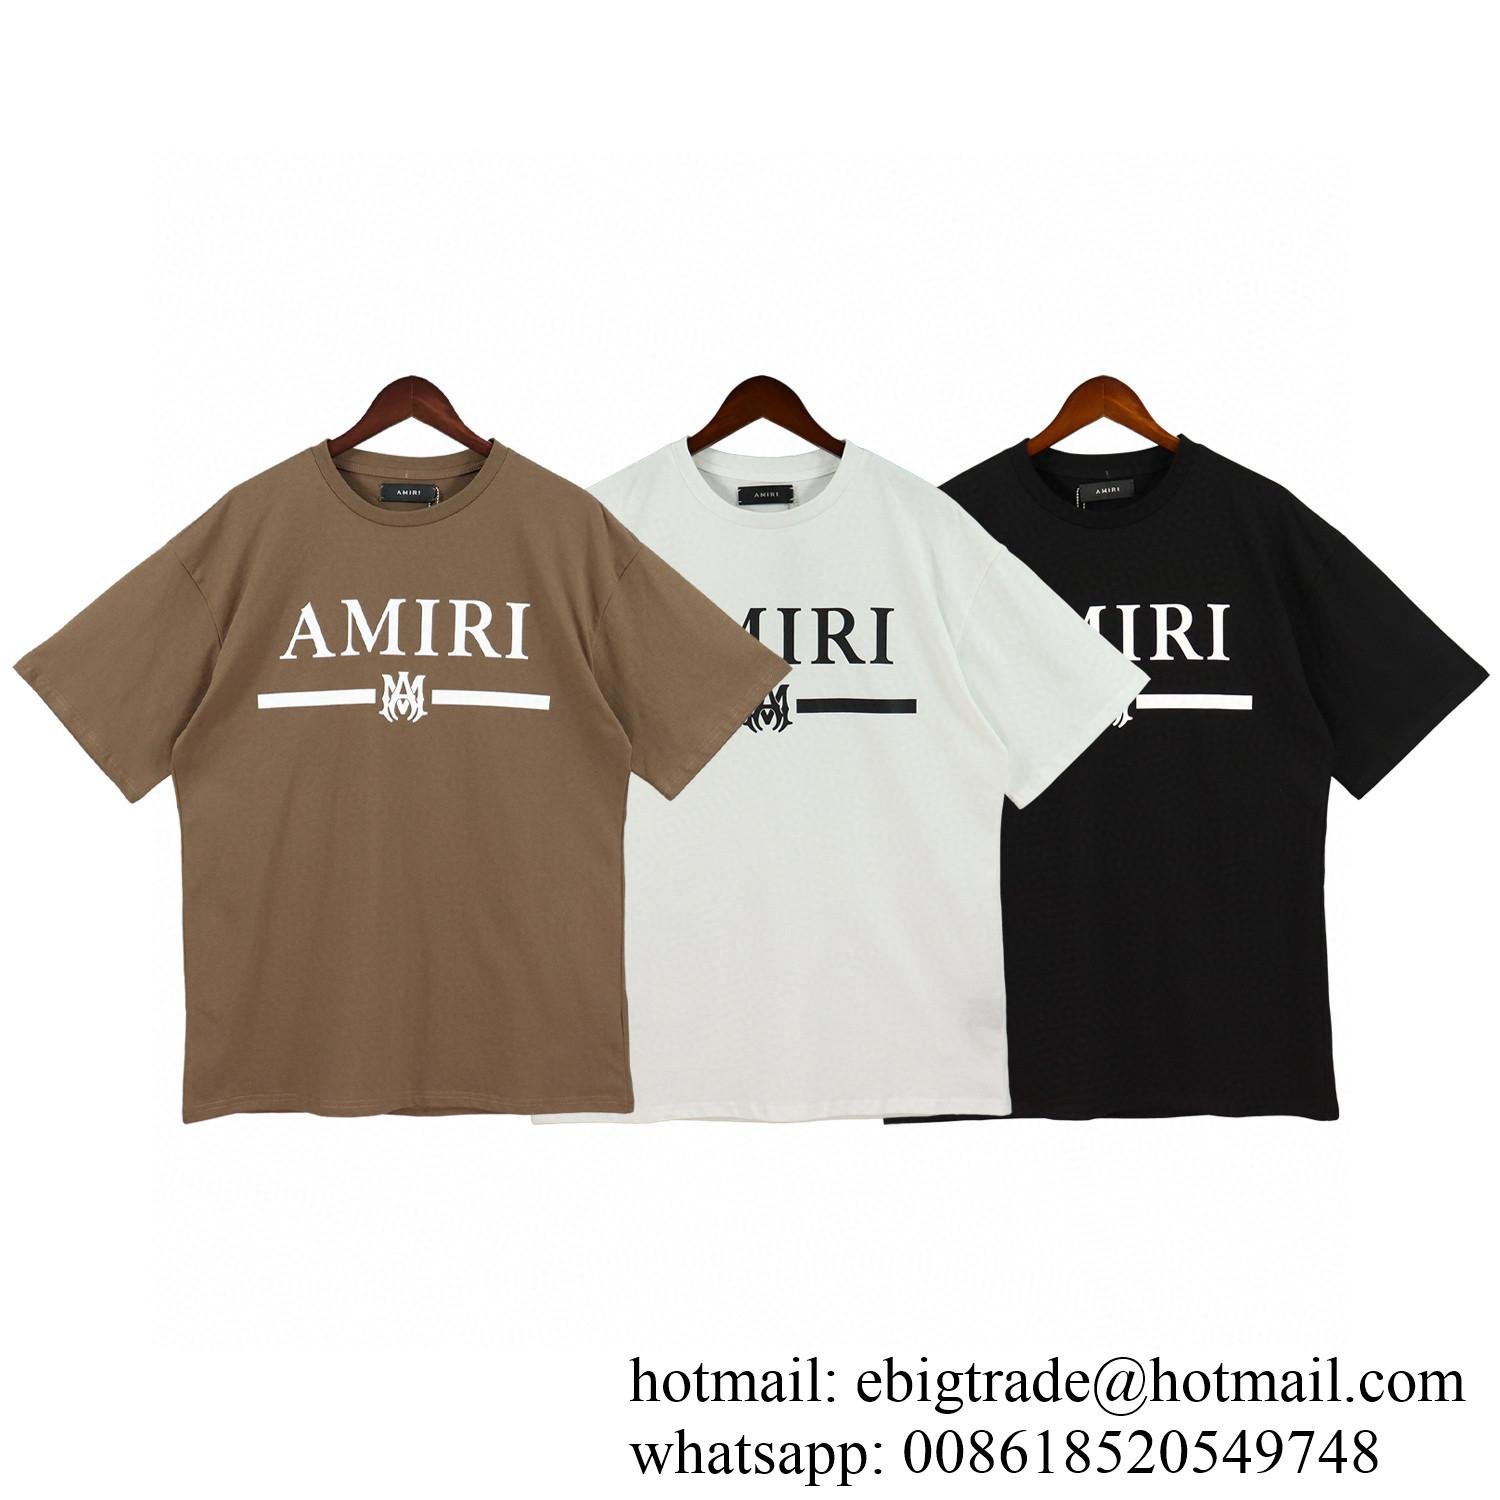 Wholesale Amiri t shirts Cheap Amiri men's t shirts Amiri  tee shirts 3